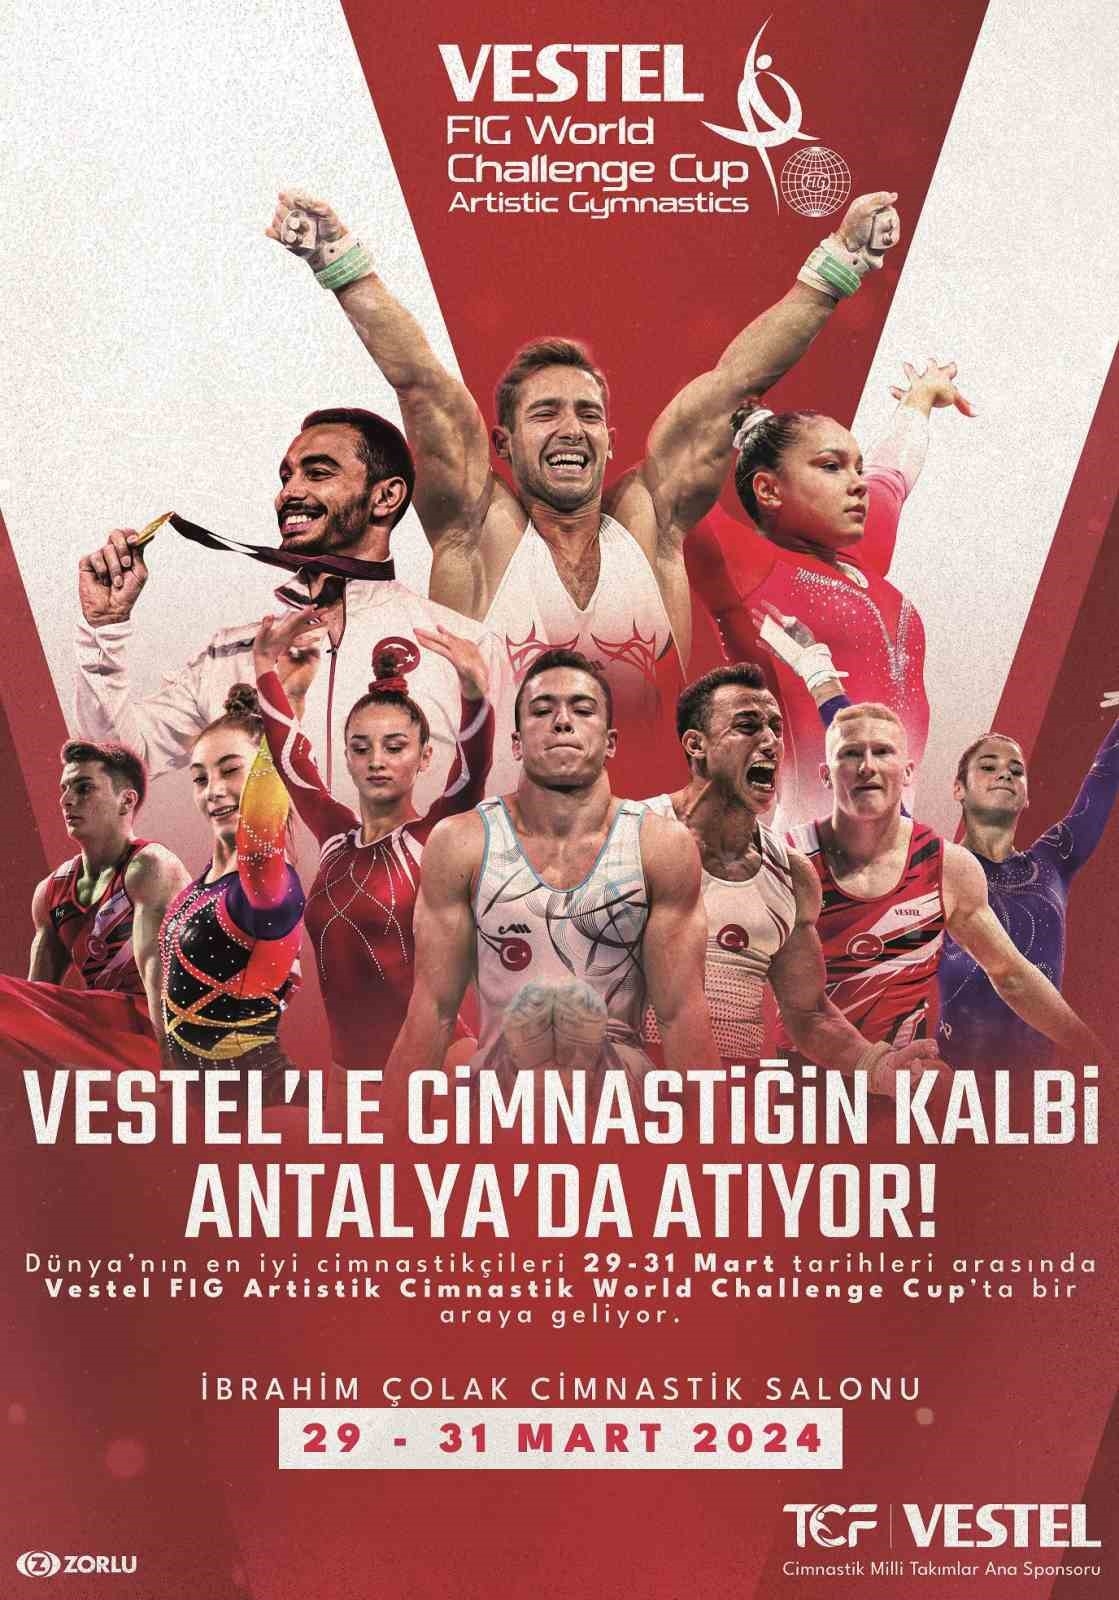 Vestel, FIG Artistic Gymnastics World Challenge Cup’ın isim sponsoru oldu
